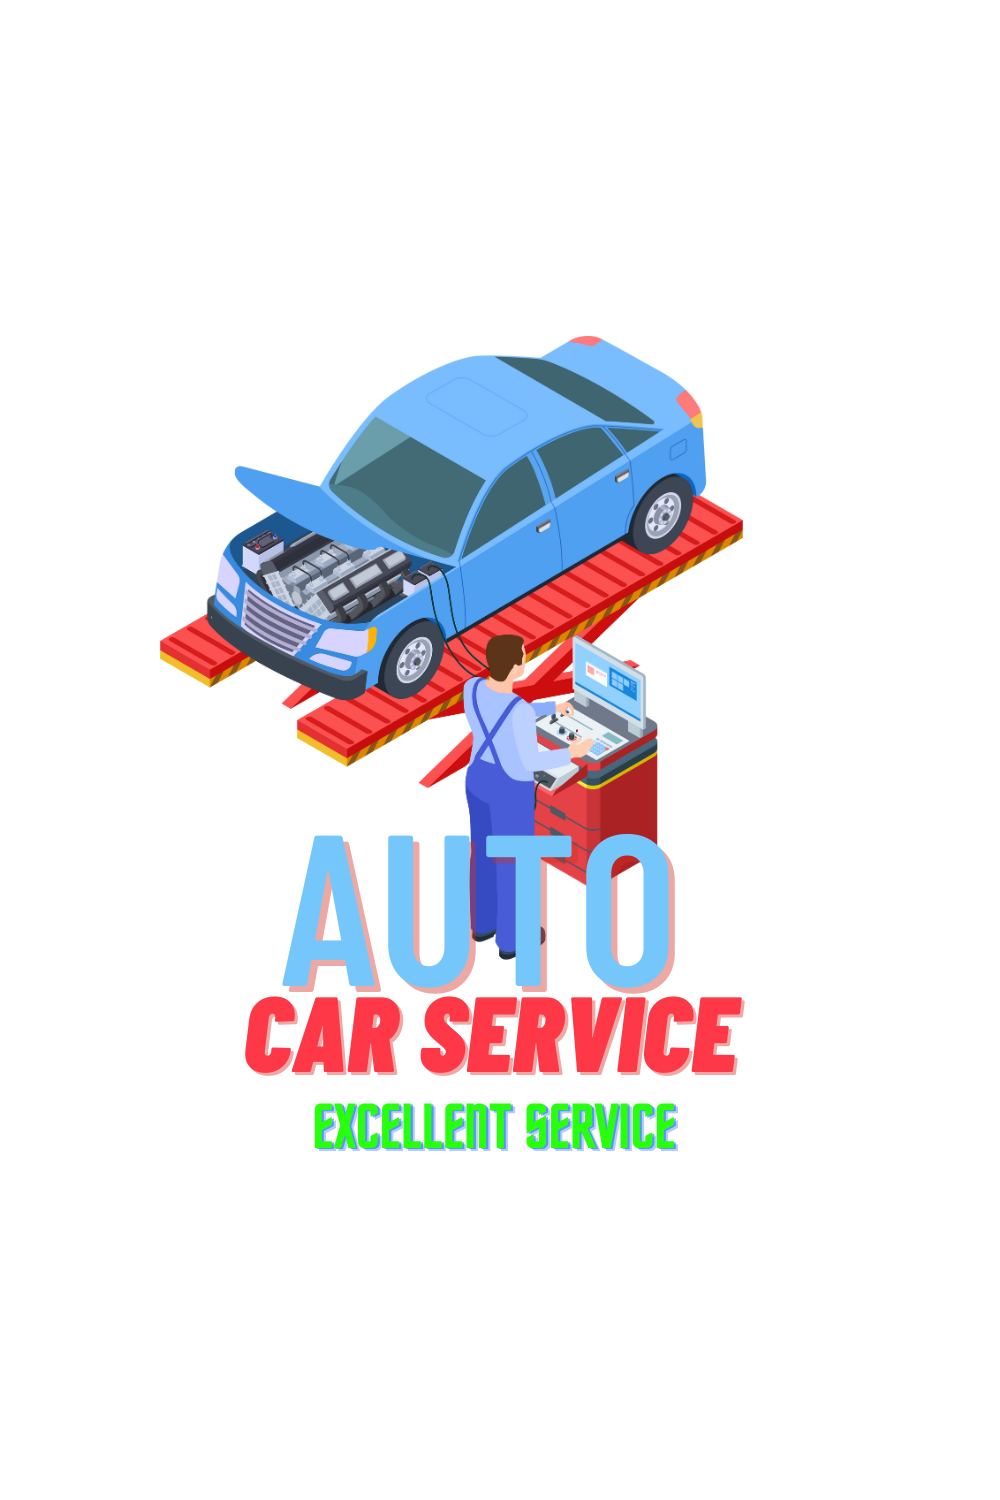 car service logo pinterest preview image.